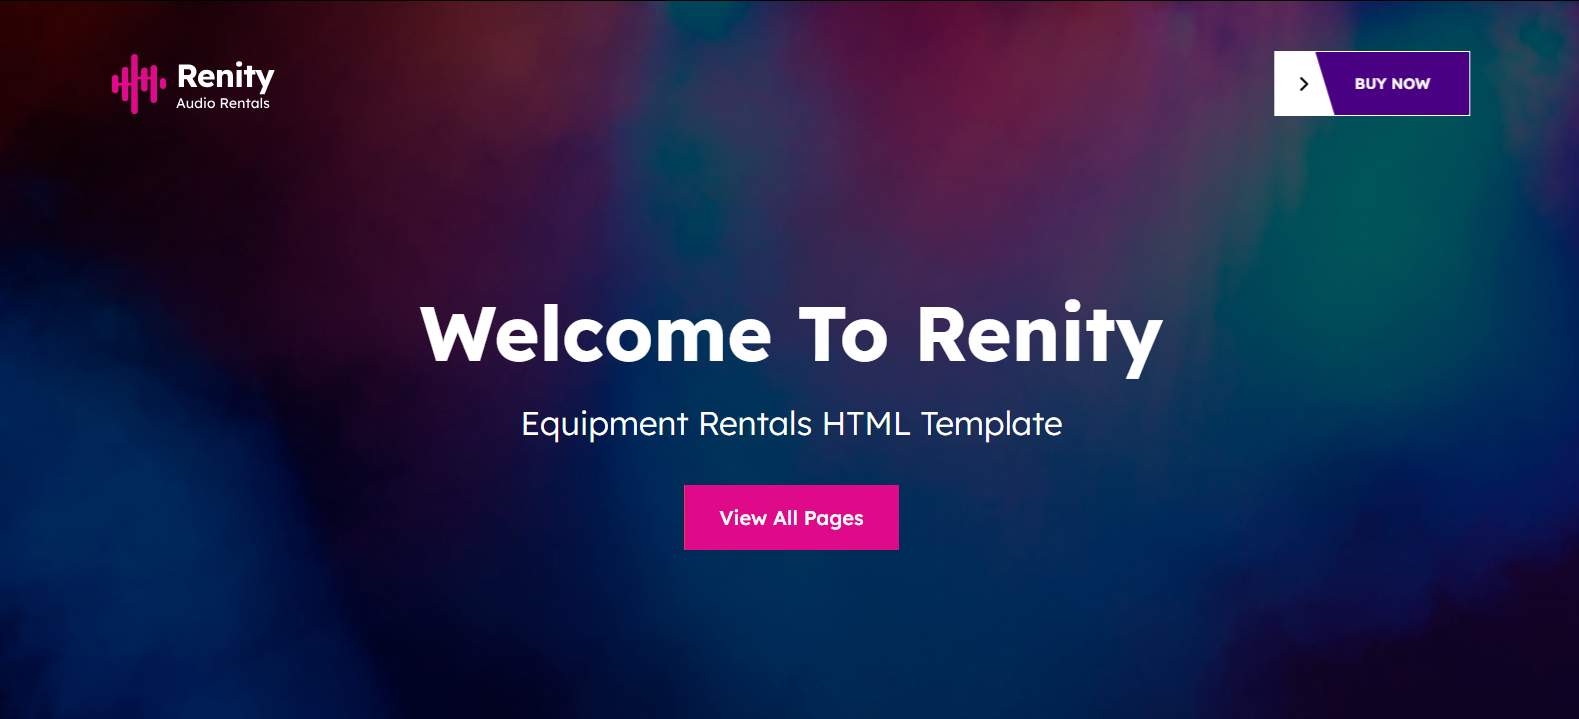 Renity - Equipment Rentals HTML Template